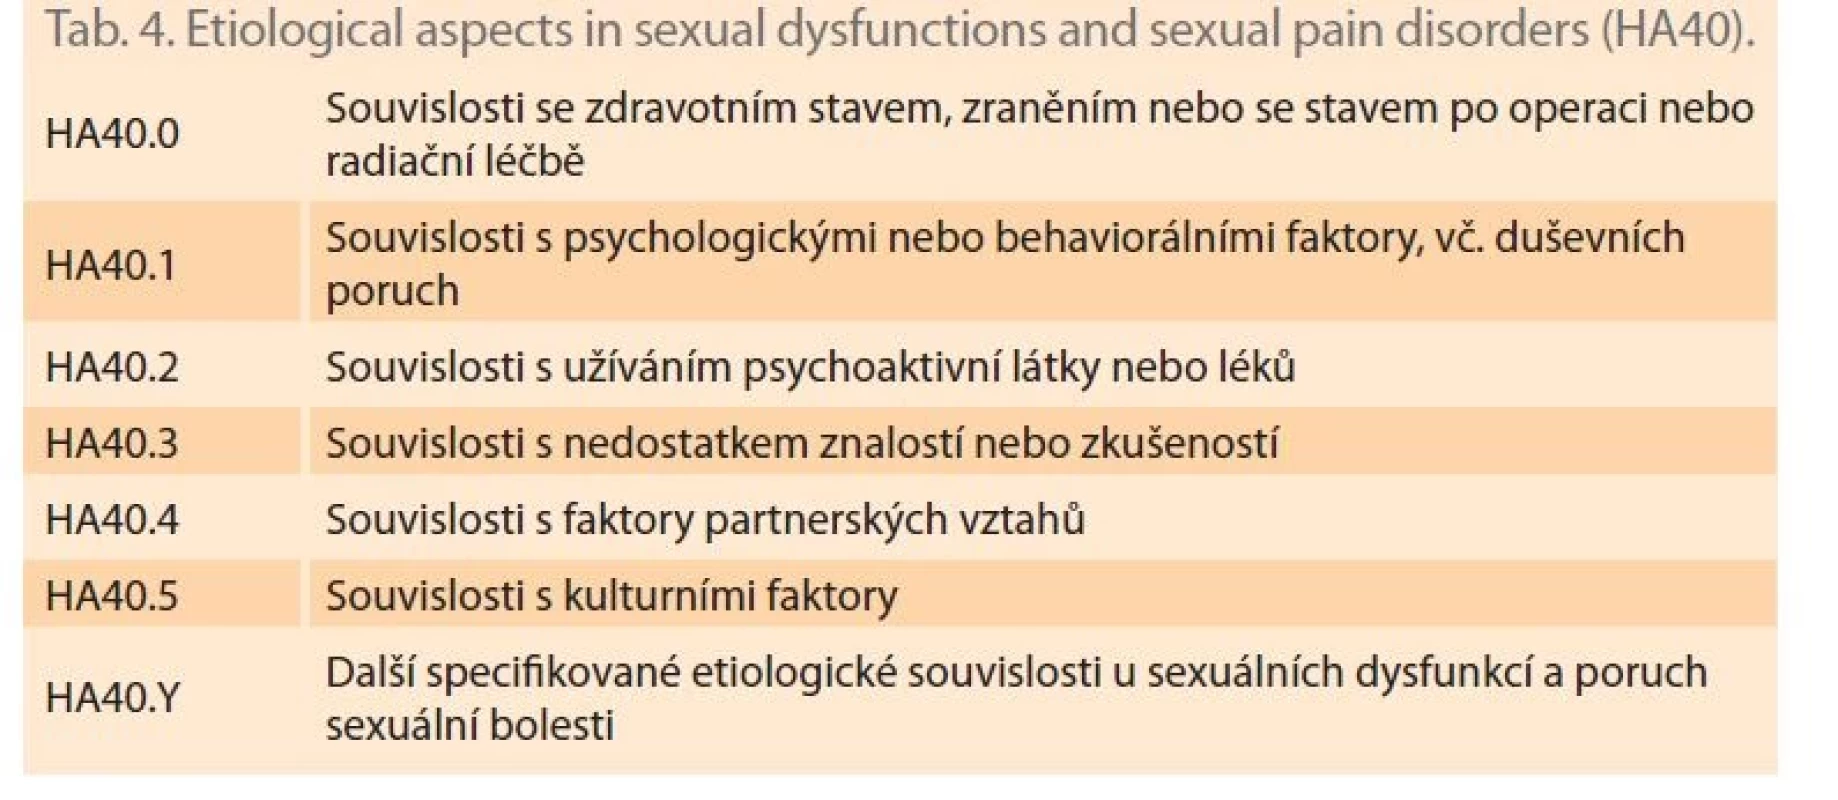 Etiologické aspekty sexuálních dysfunkcí a poruch sexuální bolesti
(HA40).<br>
Tab. 4. Etiological aspects in sexual dysfunctions and sexual pain disorders (HA40).